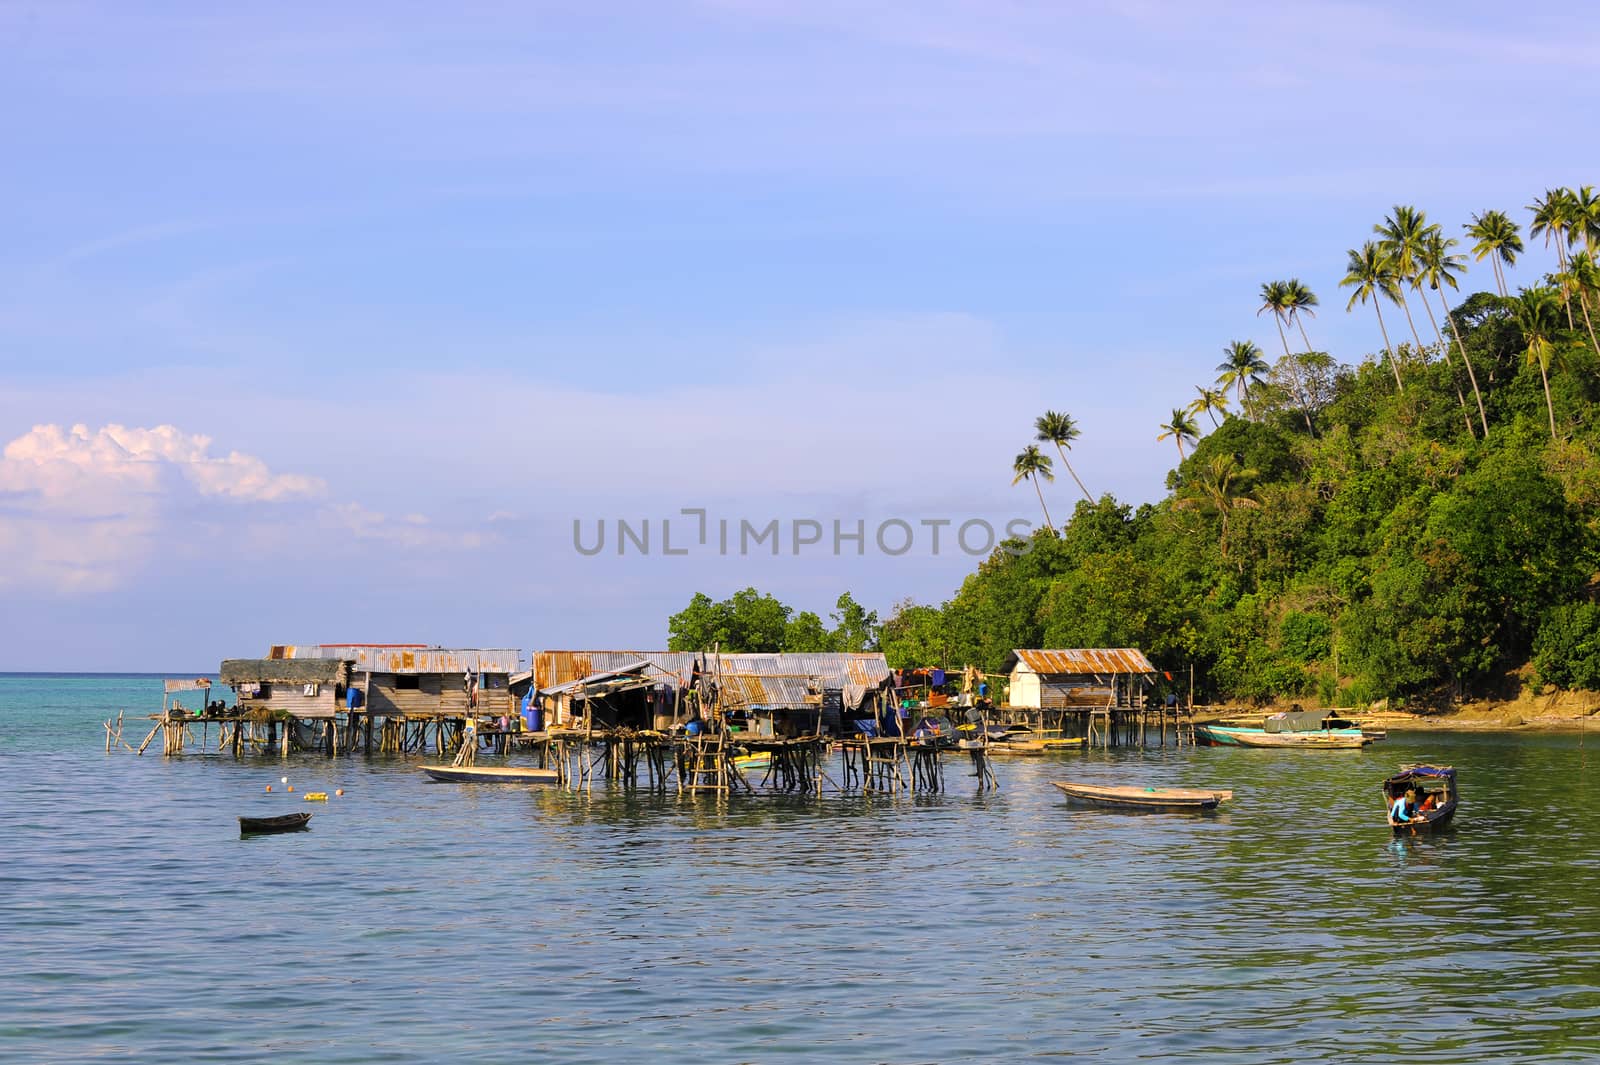 Bajau’s floating village at Semporna Sabah, Borneo, Malaysia
